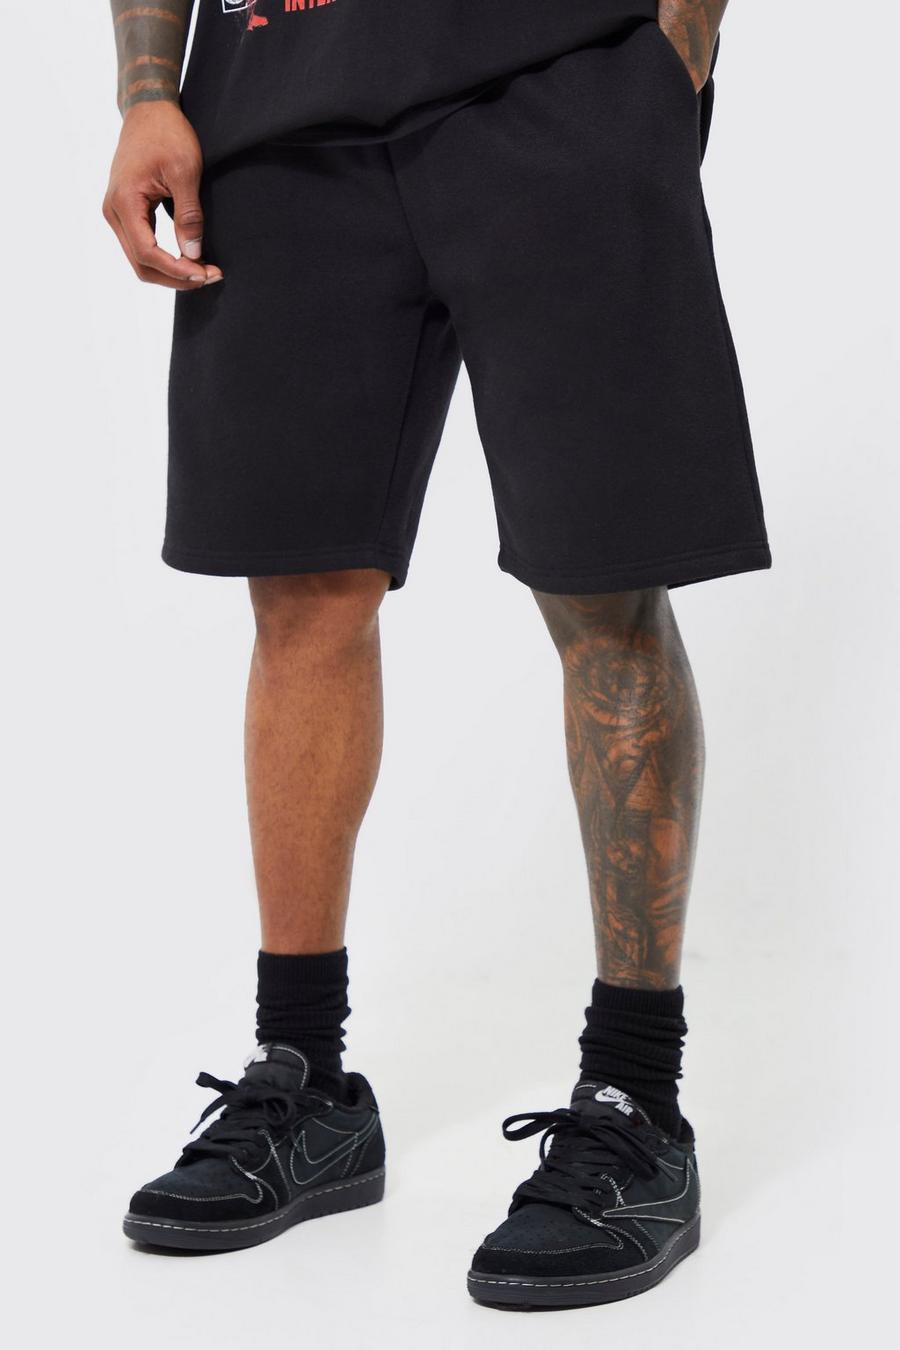 Lockere mittellange Basic Shorts, Black